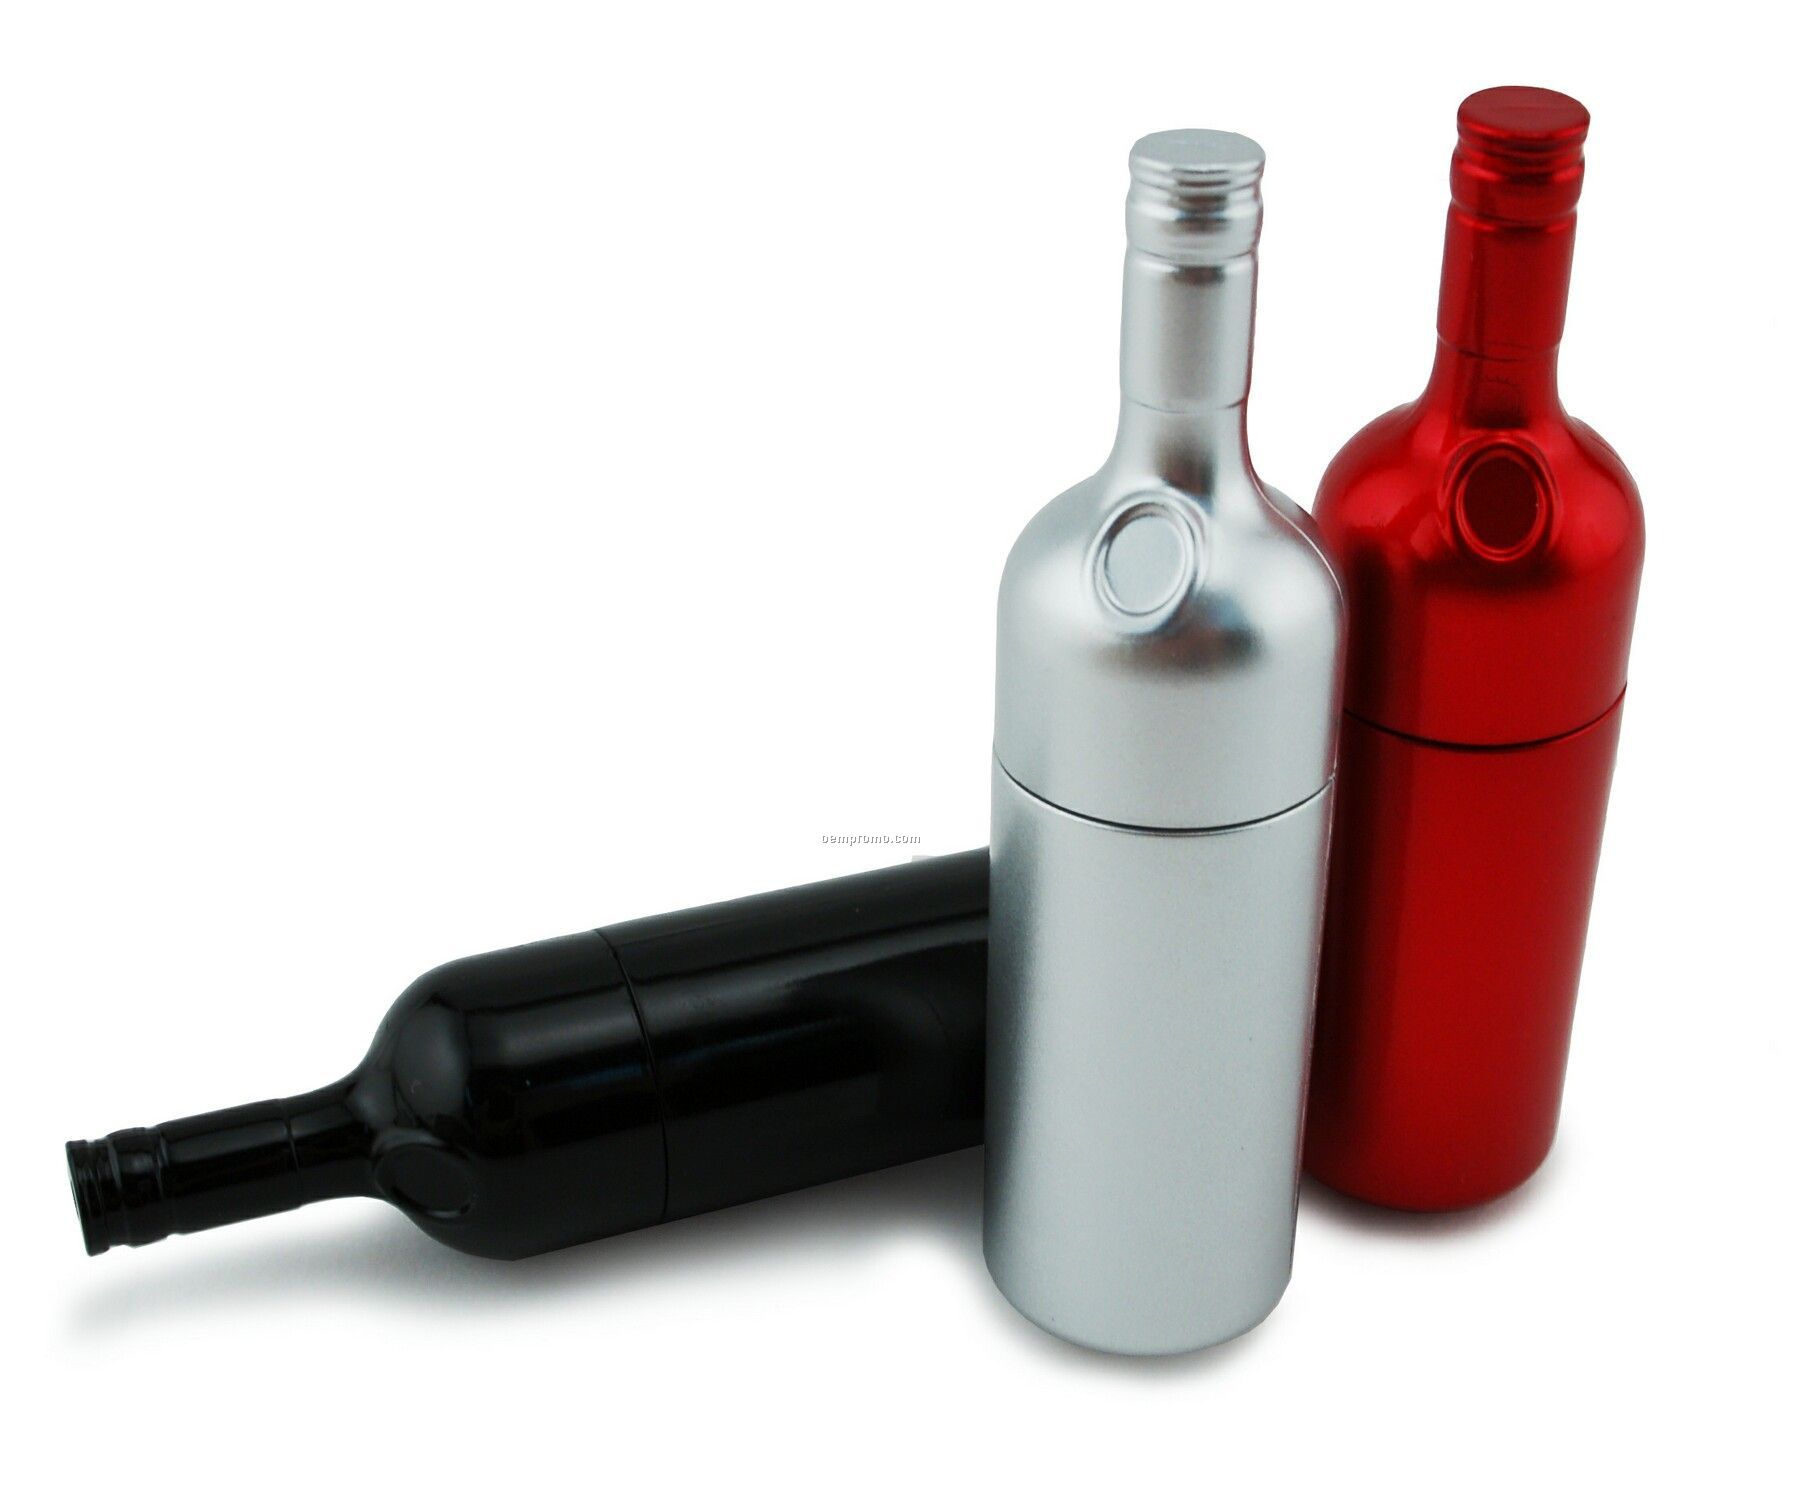 2 Gb Specialty USB Drive - Wine Bottle